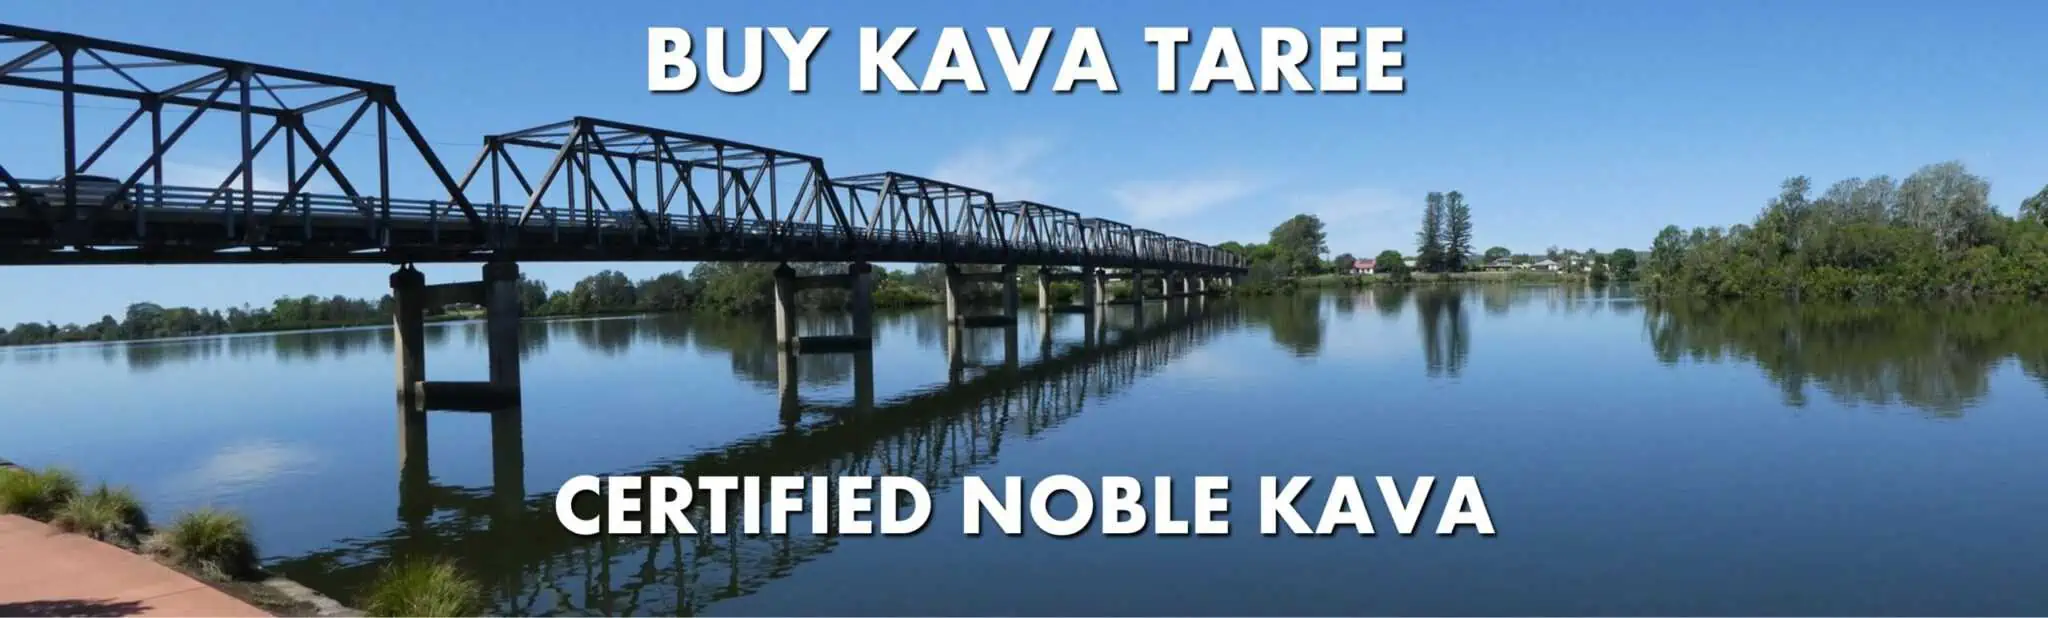 Bridge in Taree New South Wales with caption Buy Kava Taree Certified Noble Kava